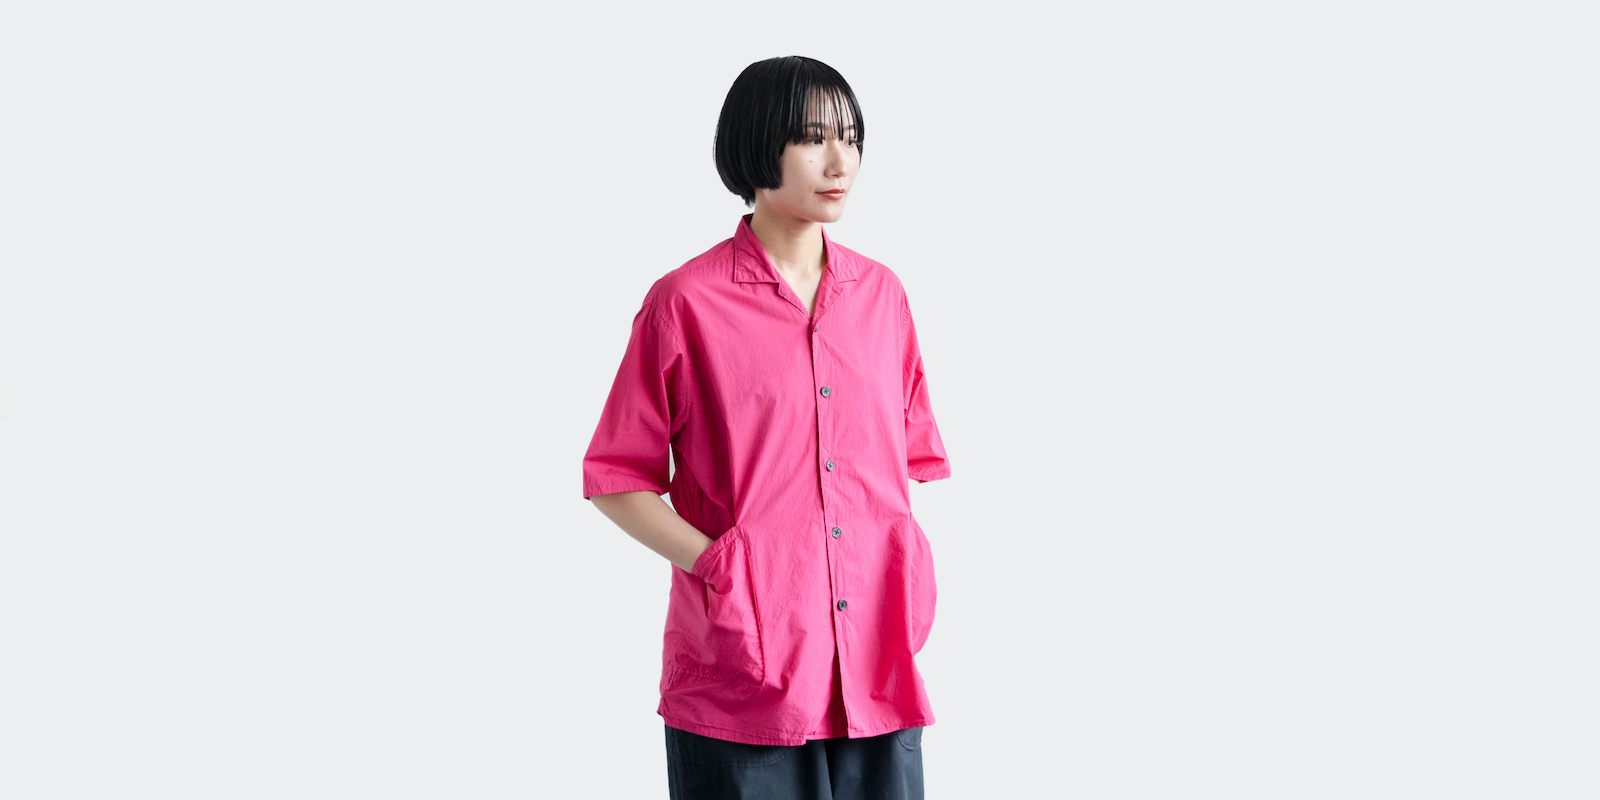 d WEAR サイドポケットシャツ・塩縮加工 ピンク・L